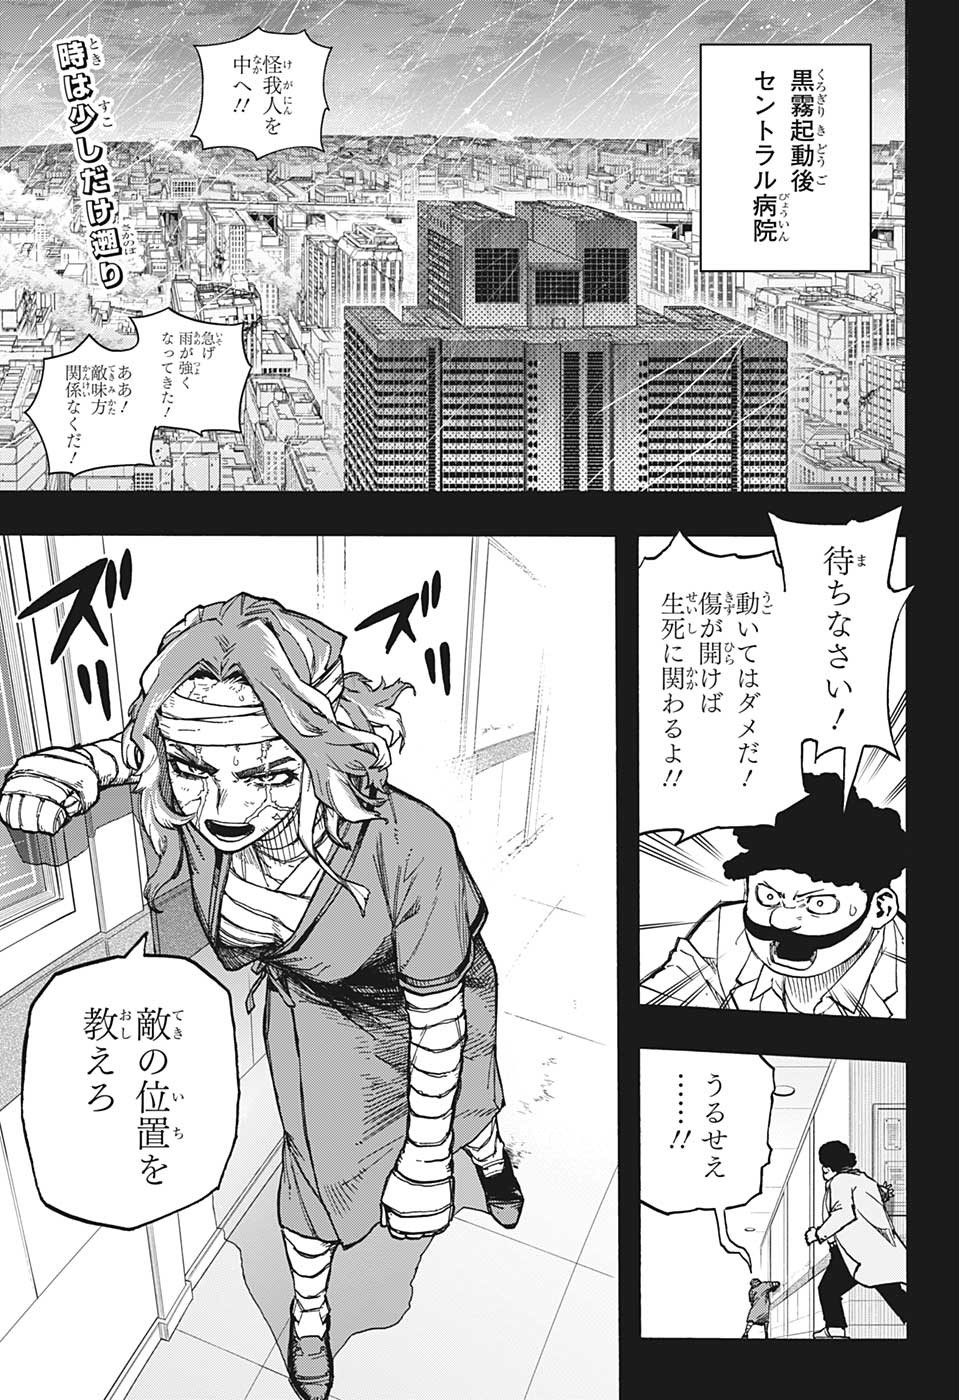 Boku no Hero Academia - Chapter 379 - Page 2